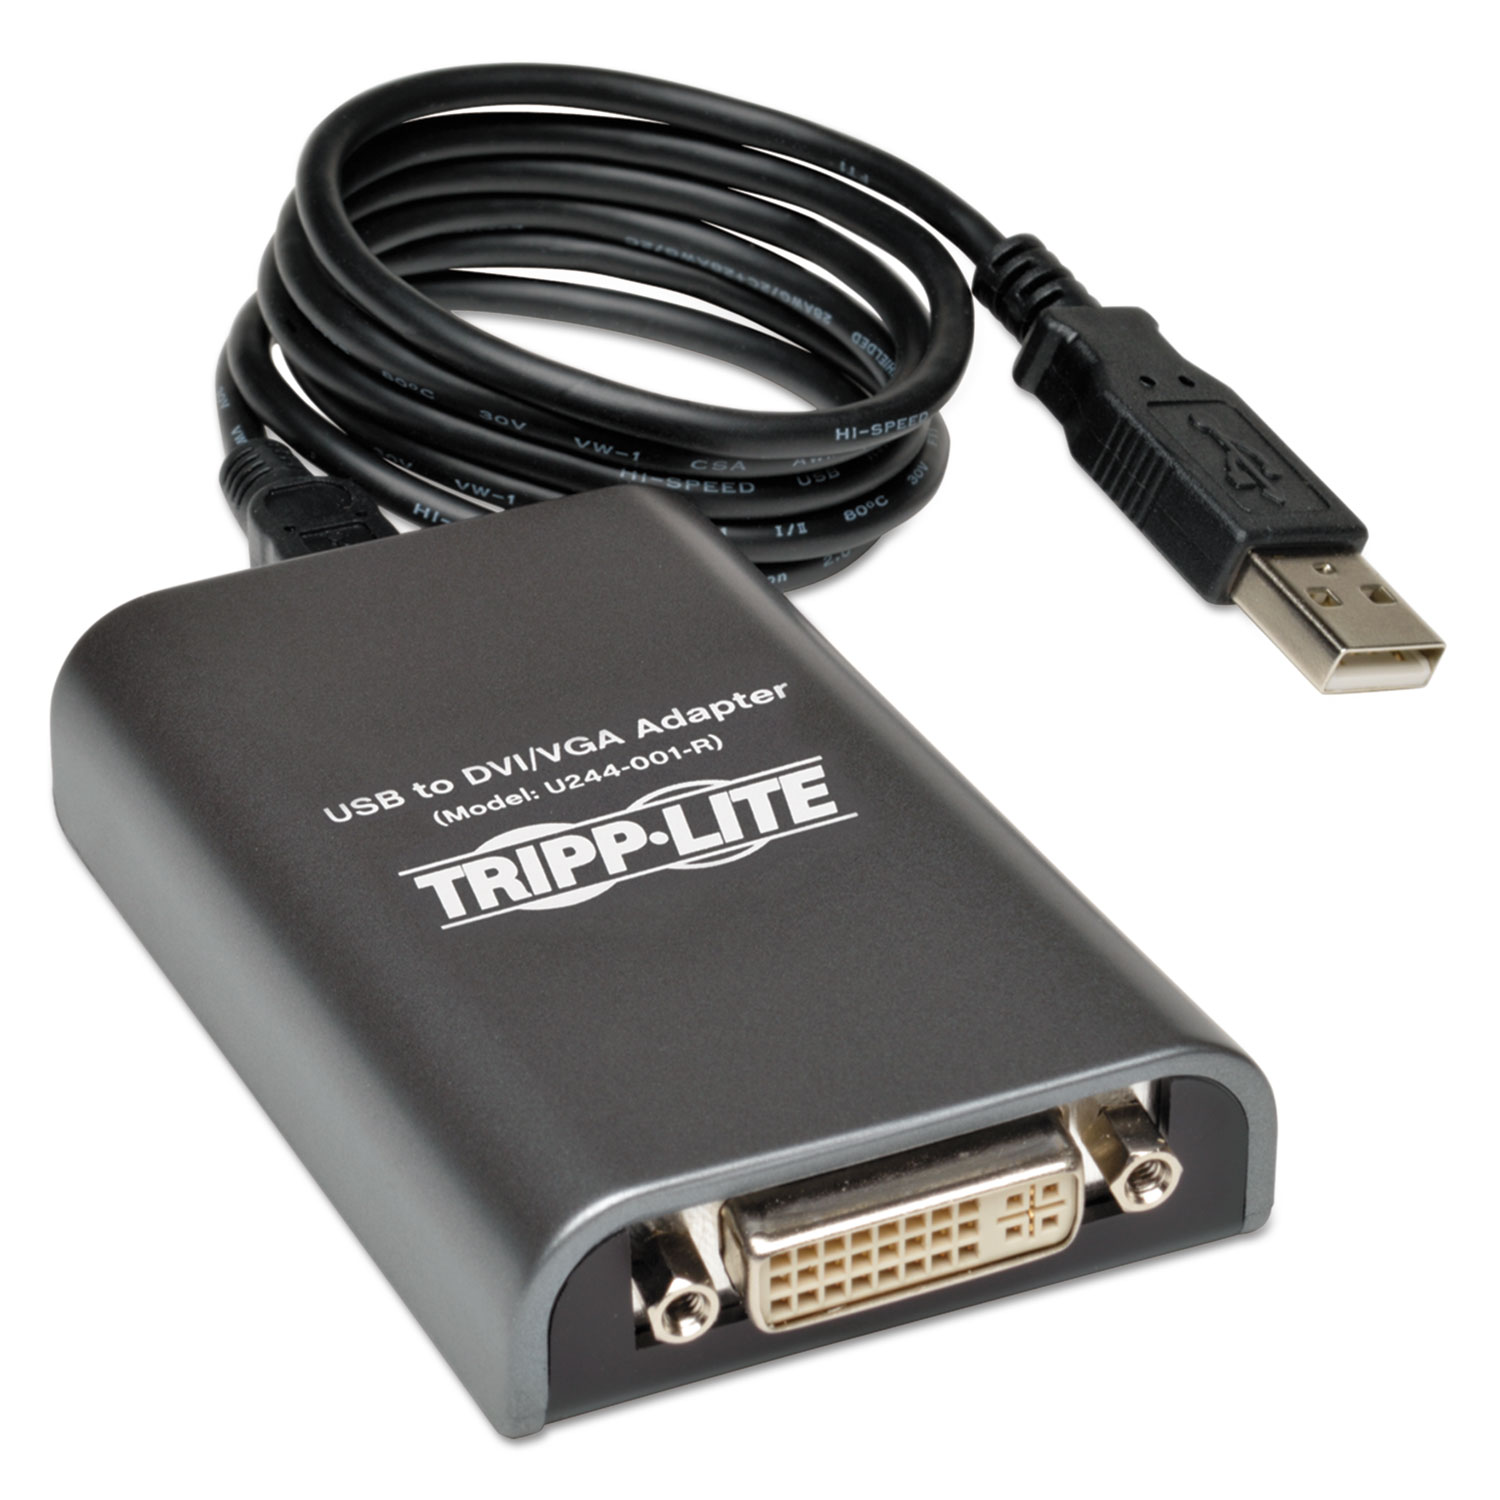  Tripp Lite U244-001-R USB 2.0 to DVI/VGA External Multi-Monitor Video Card, 128 MB SDRAM (TRPU244001R) 